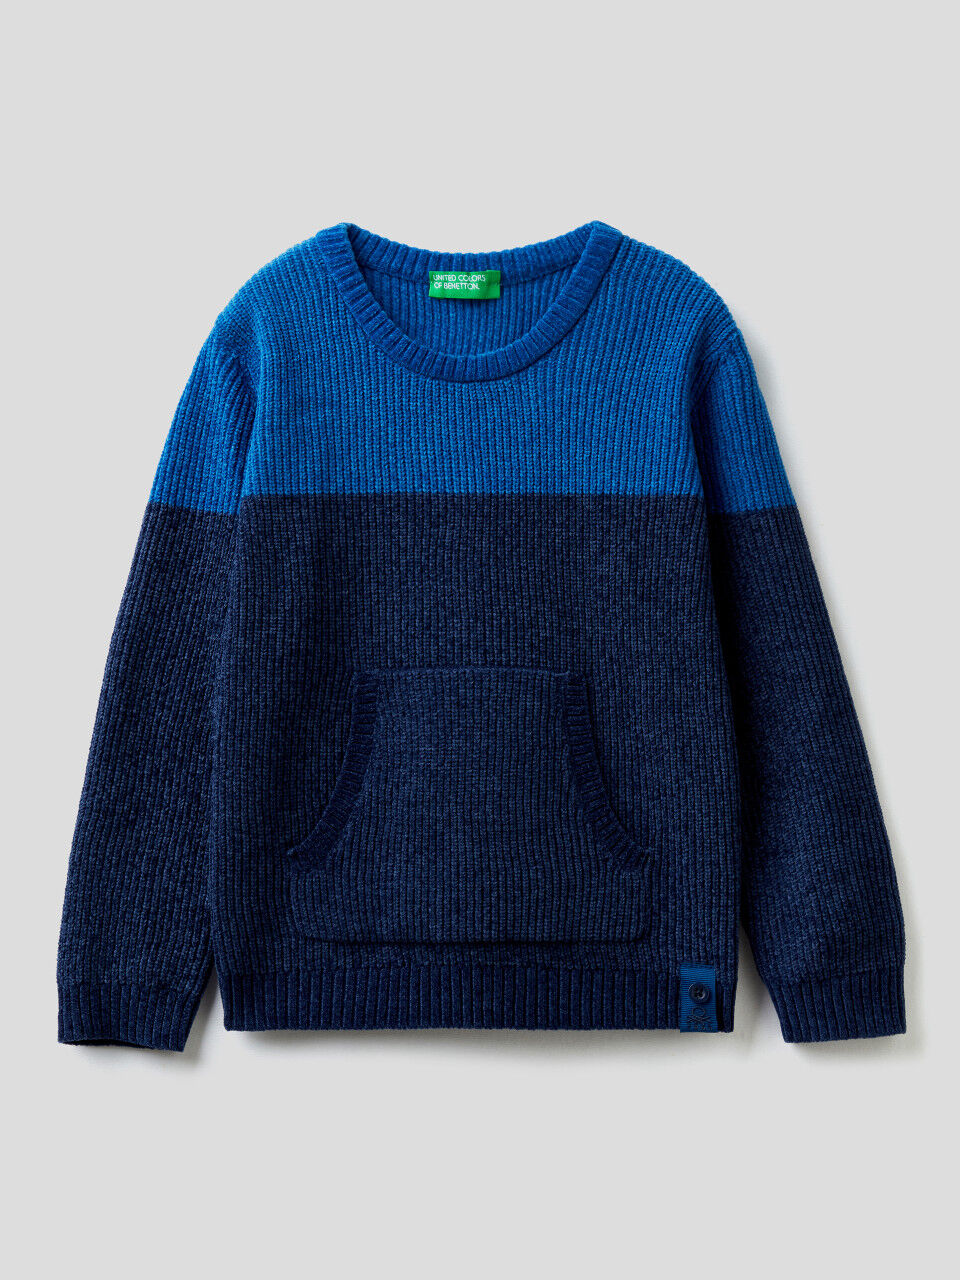 Benetton sweatshirt KIDS FASHION Jumpers & Sweatshirts Basic Blue 11Y discount 94% 